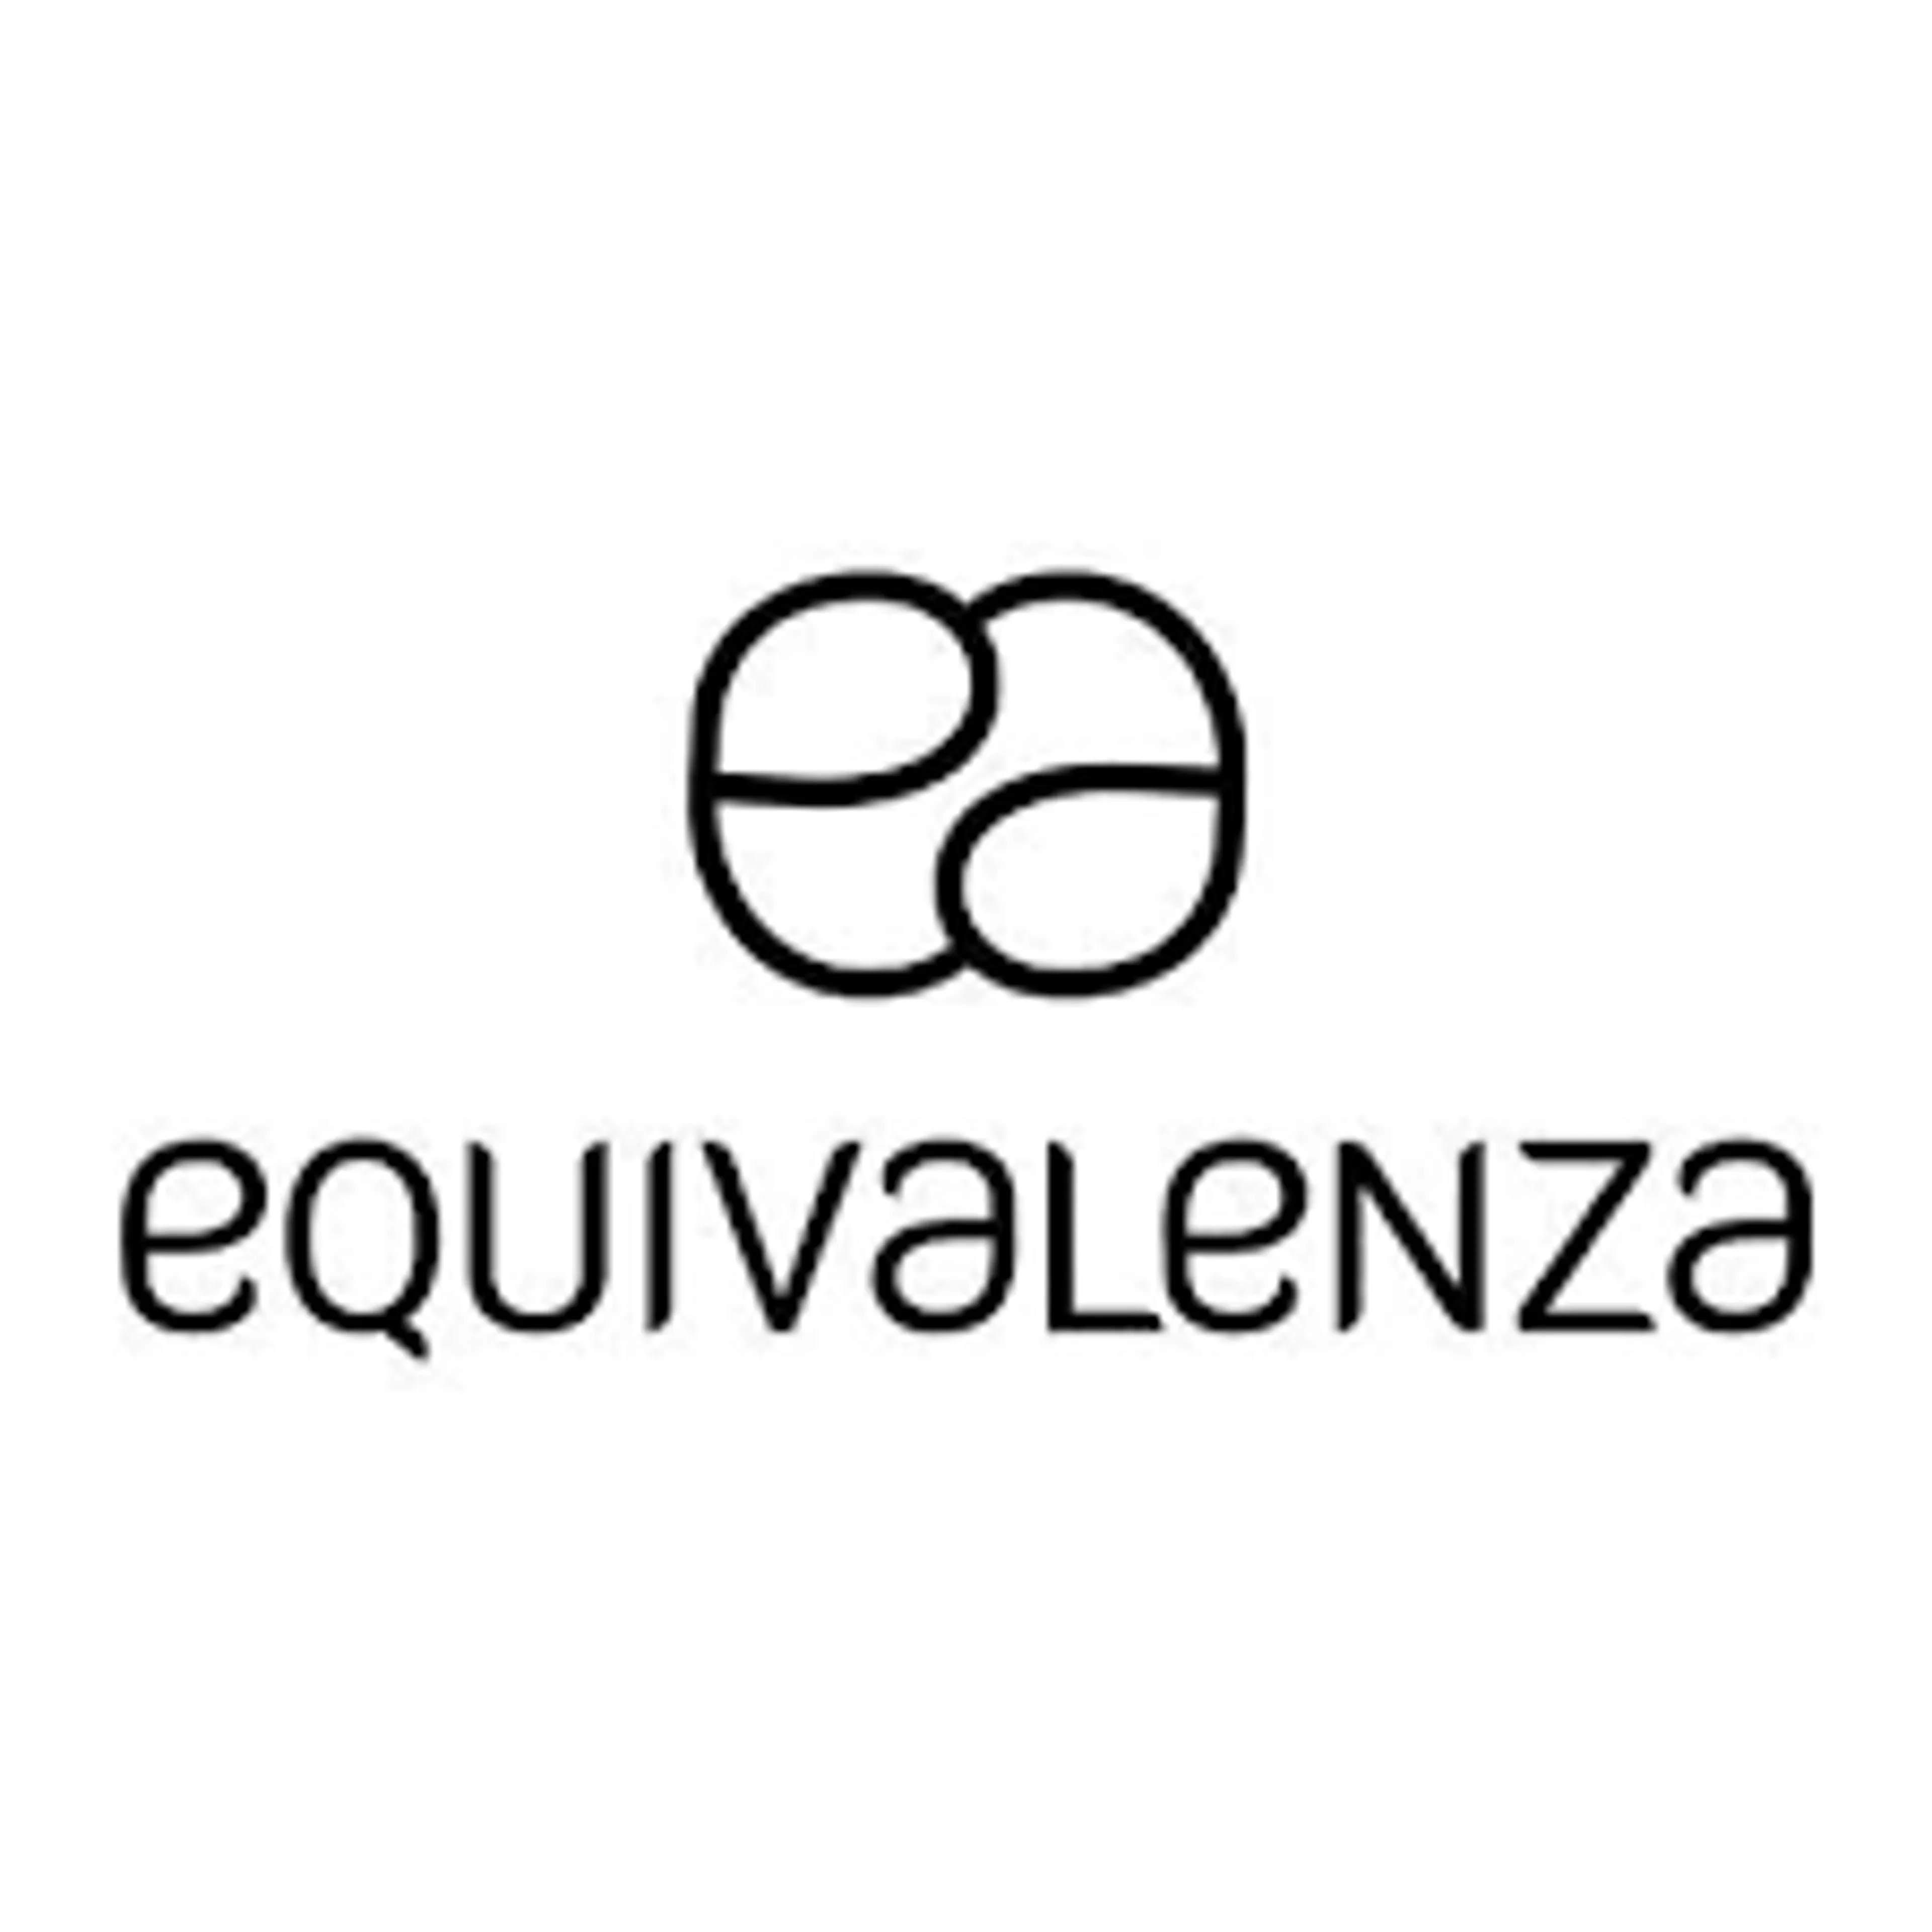 EQUIVALENZA logo